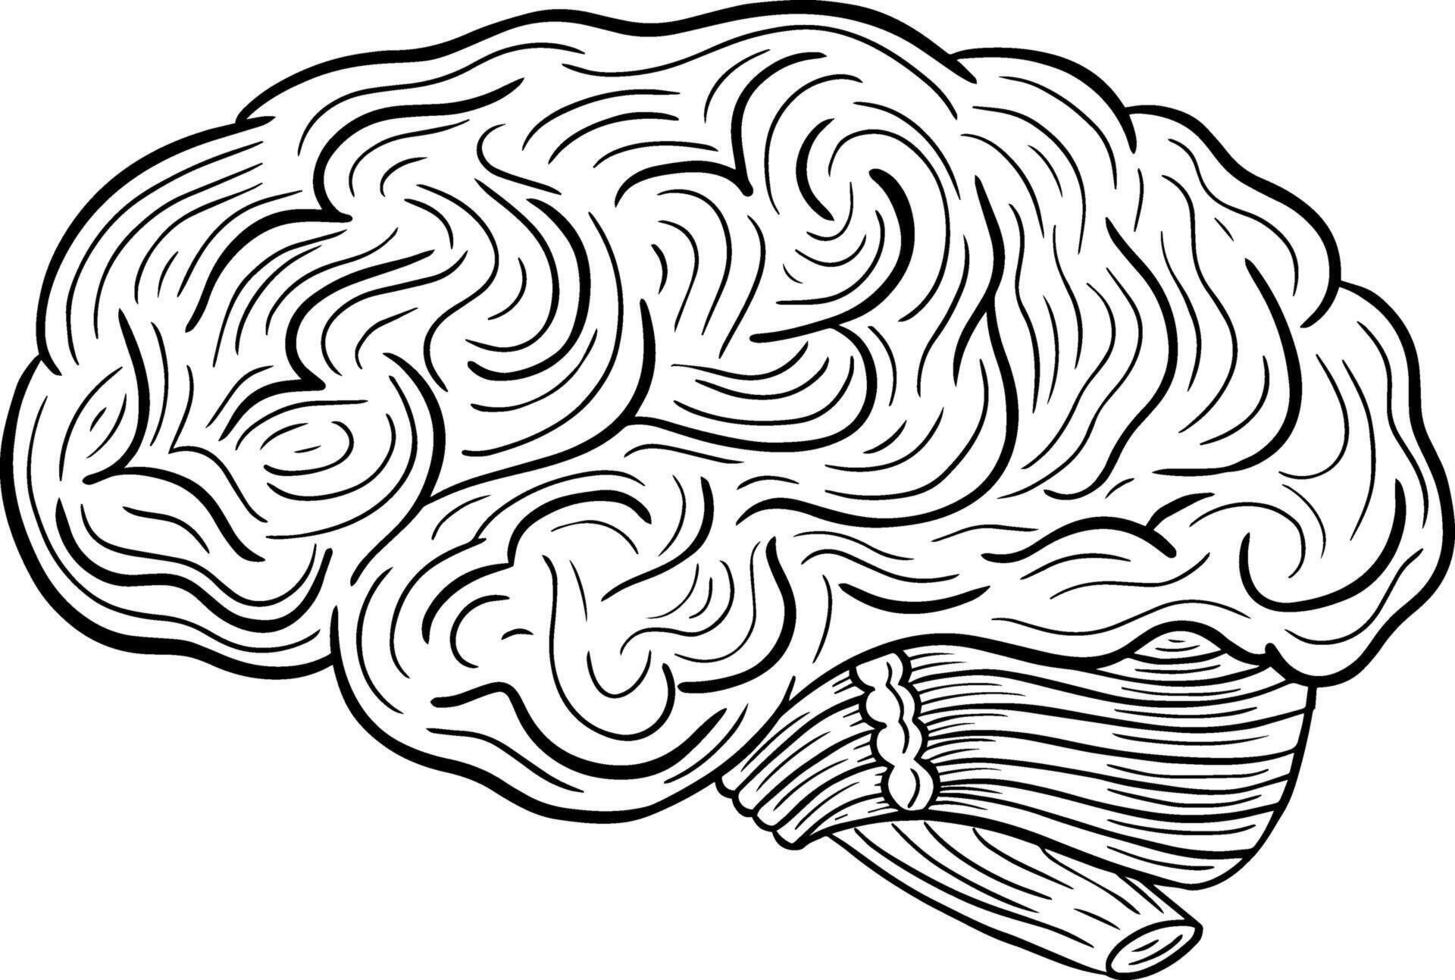 human brain hand drawn engraved sketch drawing vector